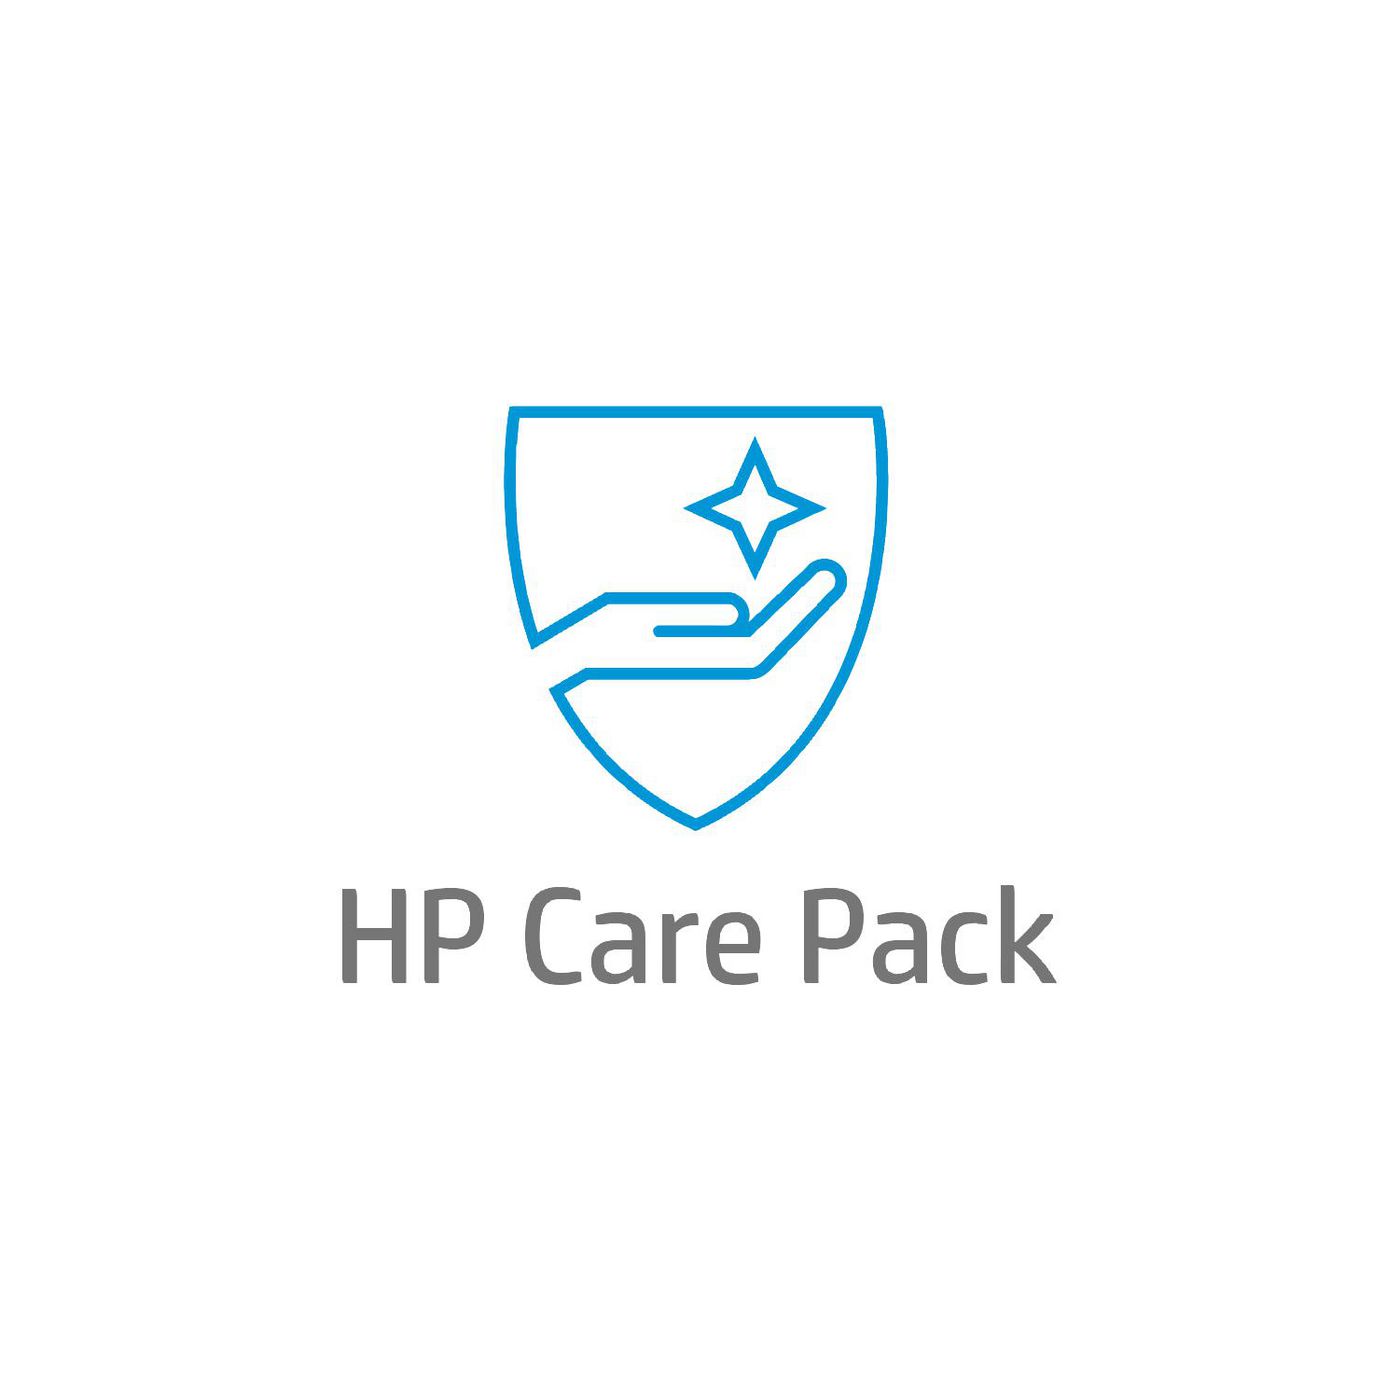 HP Care Pack Installation Service - Installation / Konfiguration - Vor-Ort